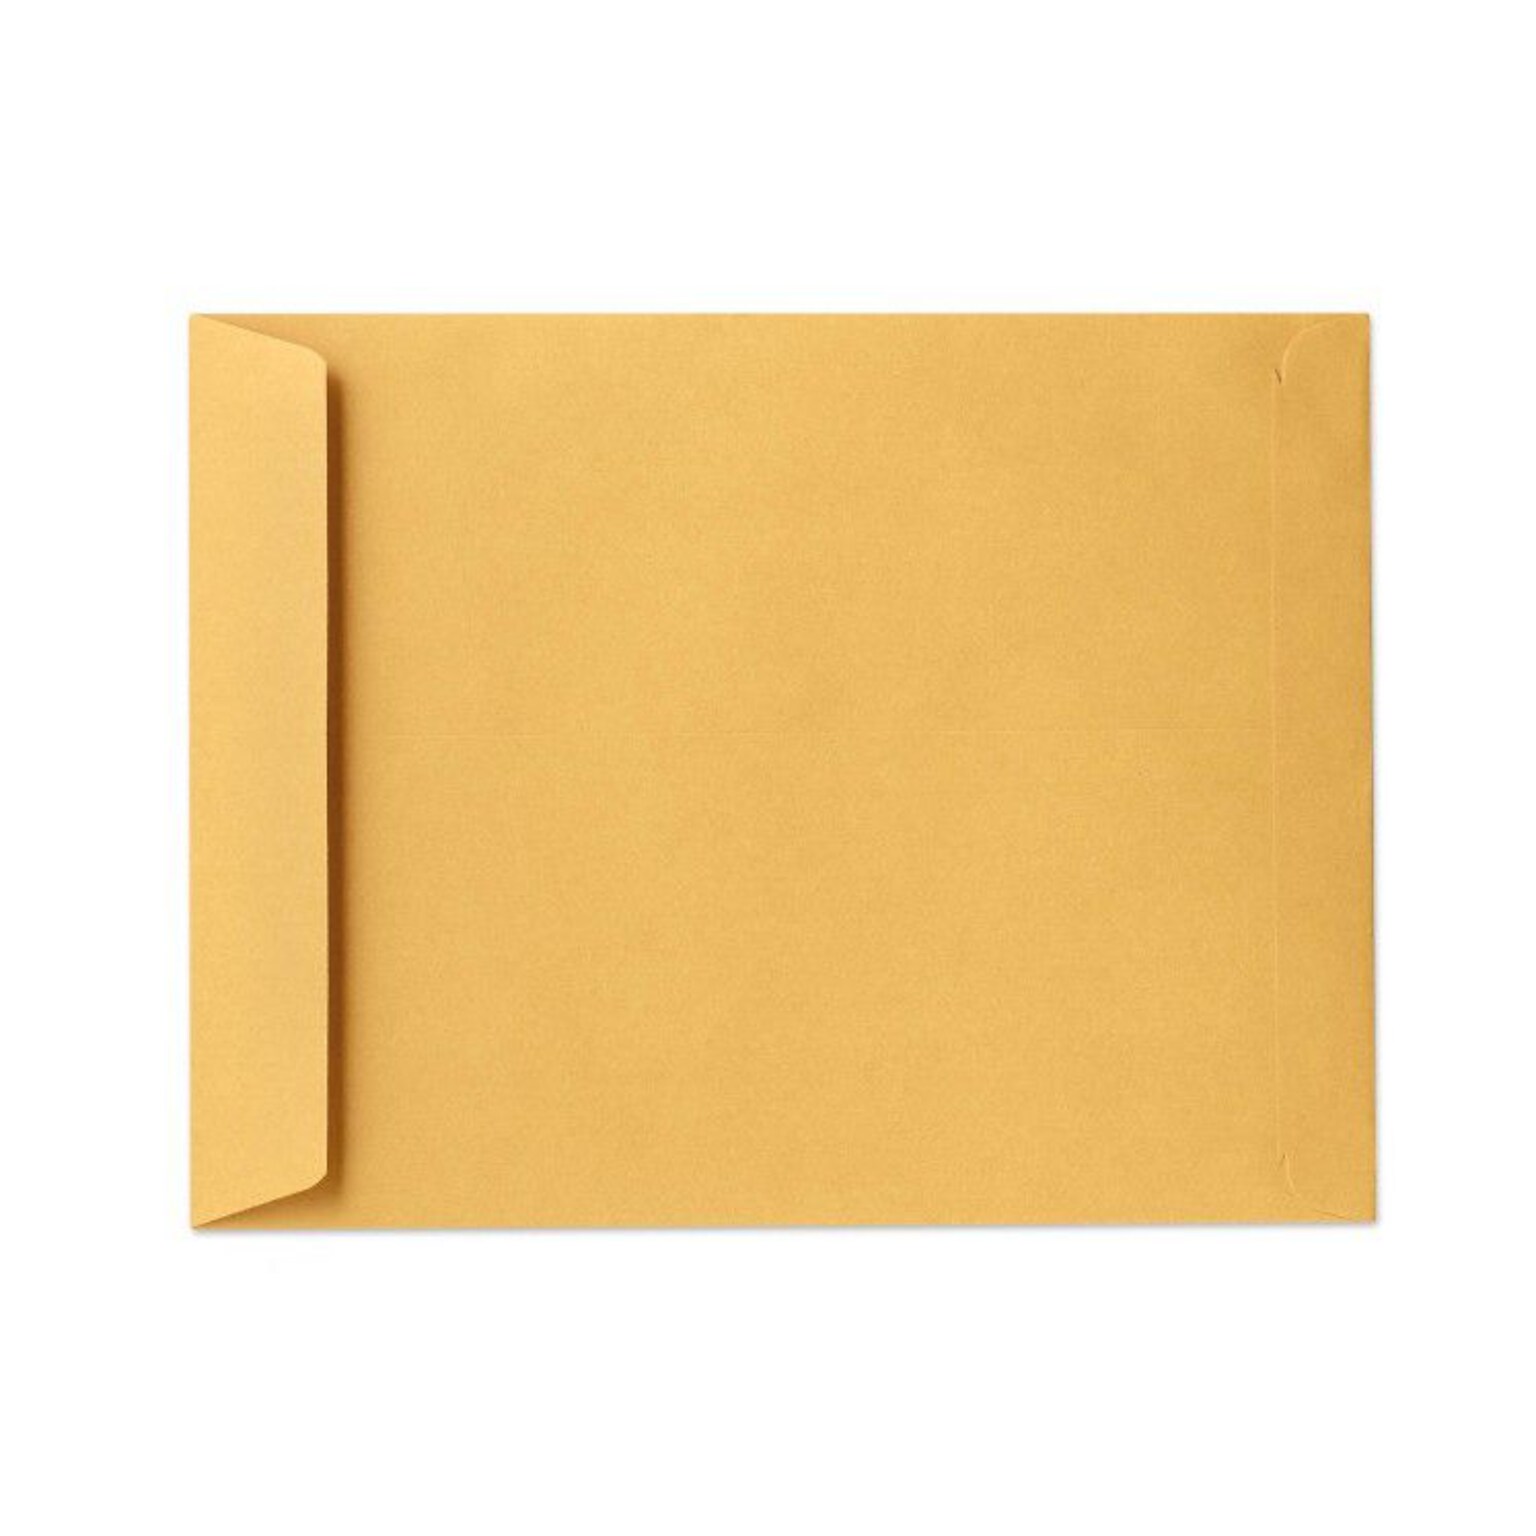 Lux 12 1/2 x 18 1/2 28lbs. Jumbo Open End Envelopes; Brown Kraft, 50/Pk